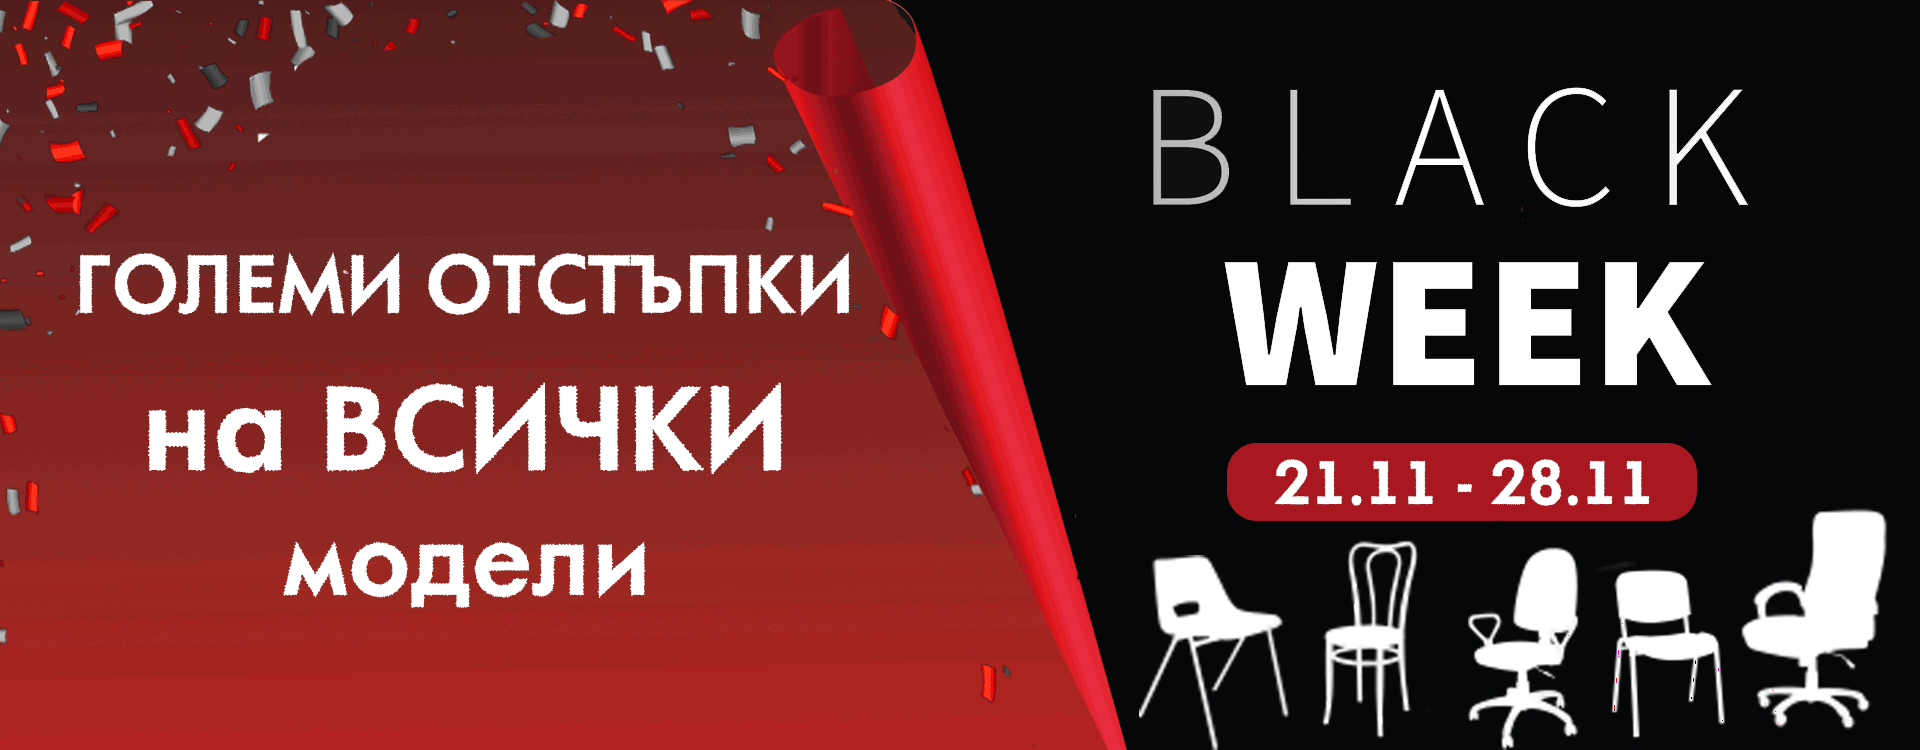 BLACK WEEK в Stol4e.bg